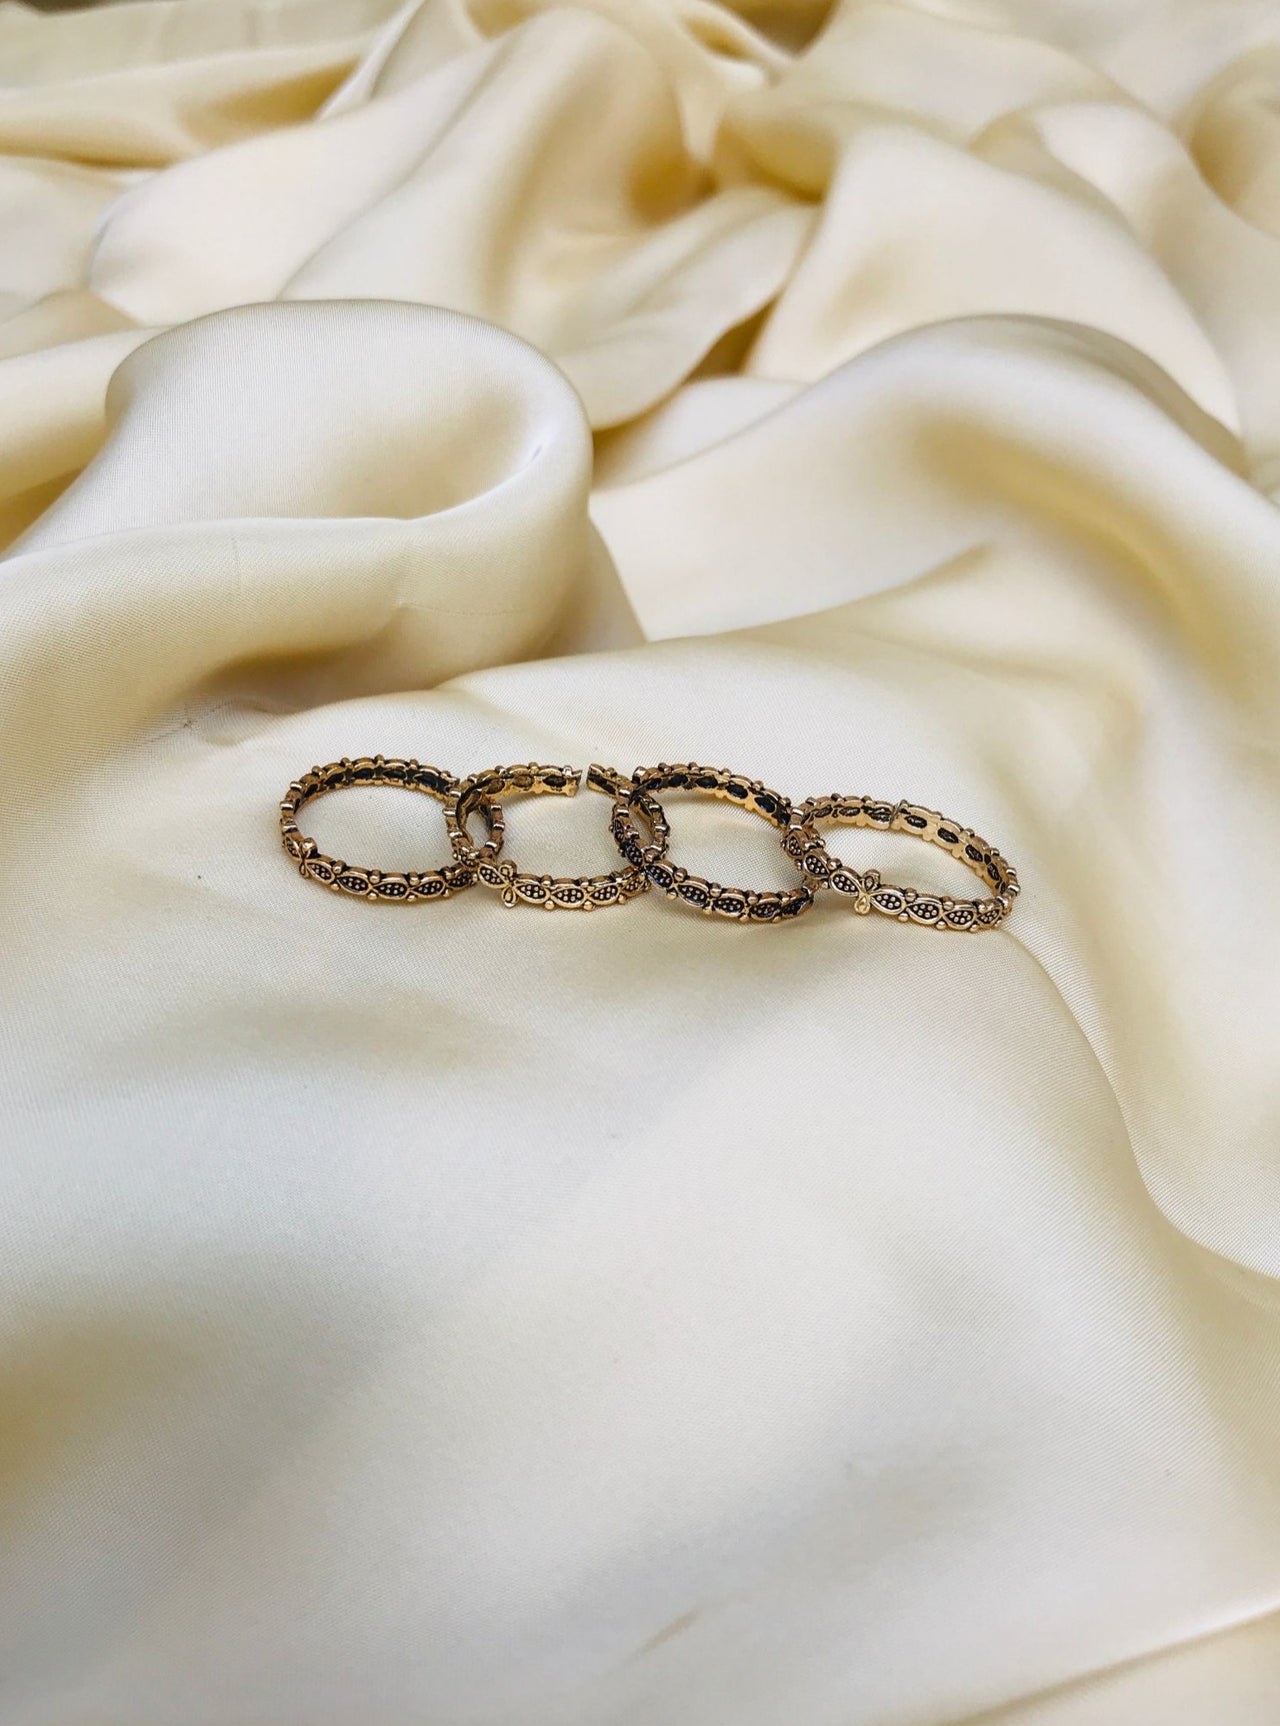 Slim Gold Oxidised Toe Rings Combo - Abdesignsjewellery